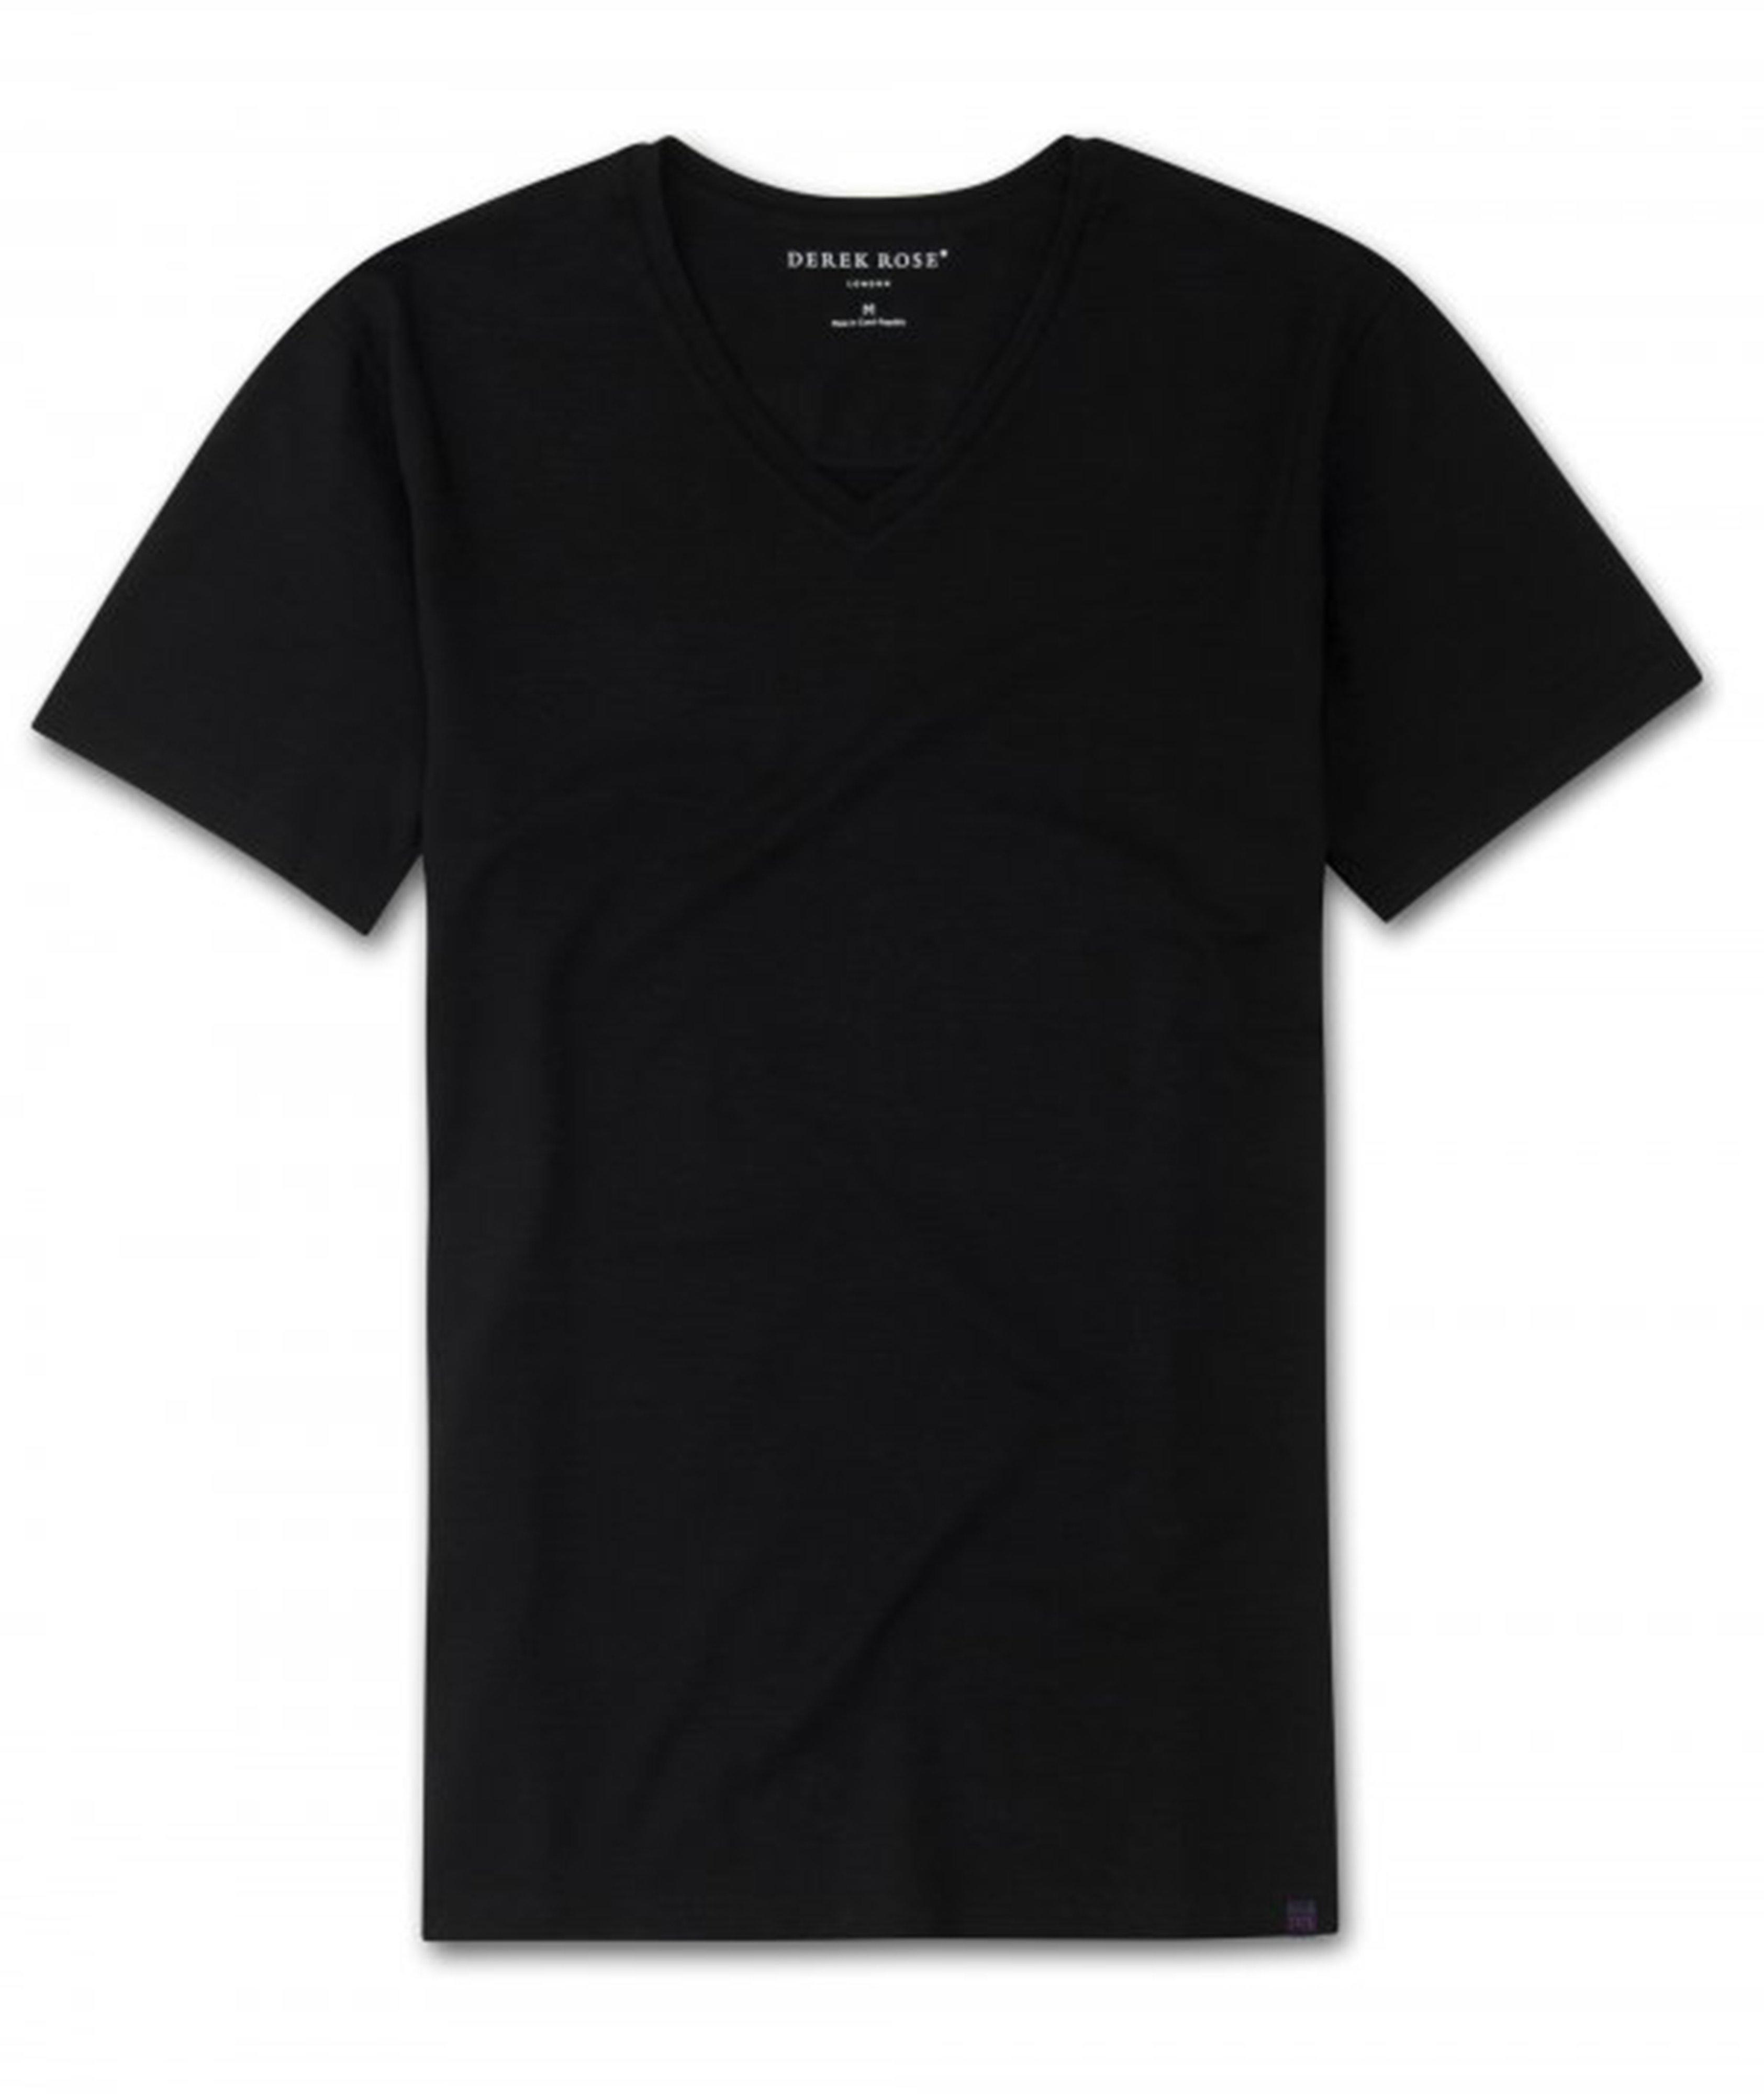 T-shirt en coton à encolure en V, collection Resort image 0